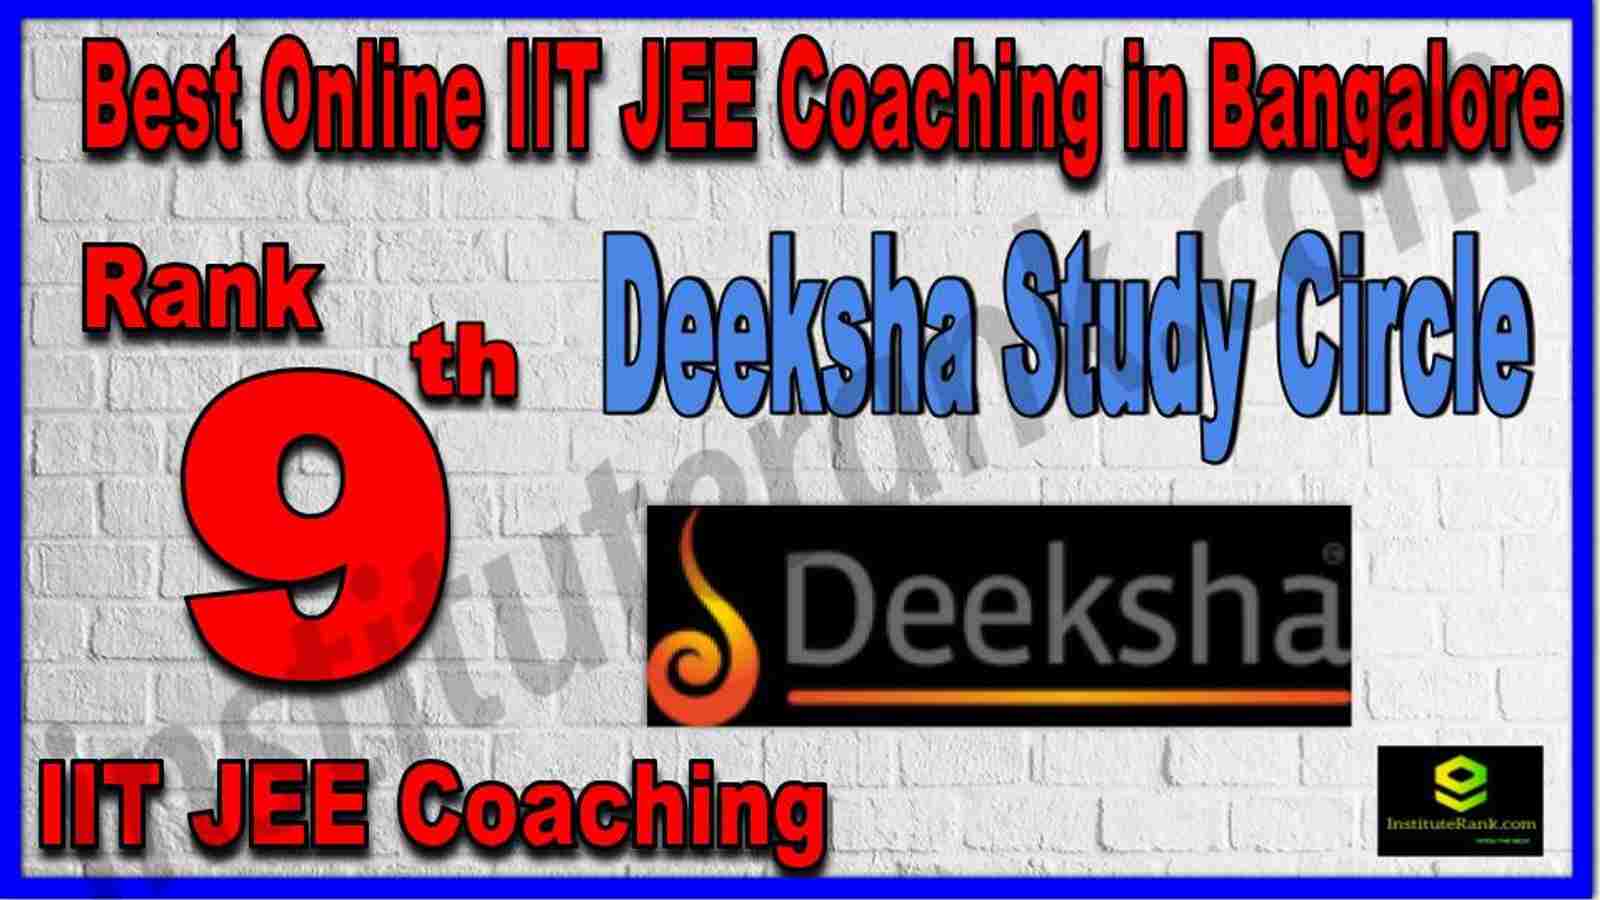 Rank 9th Best Online IIT JEE Coaching in Bangalore